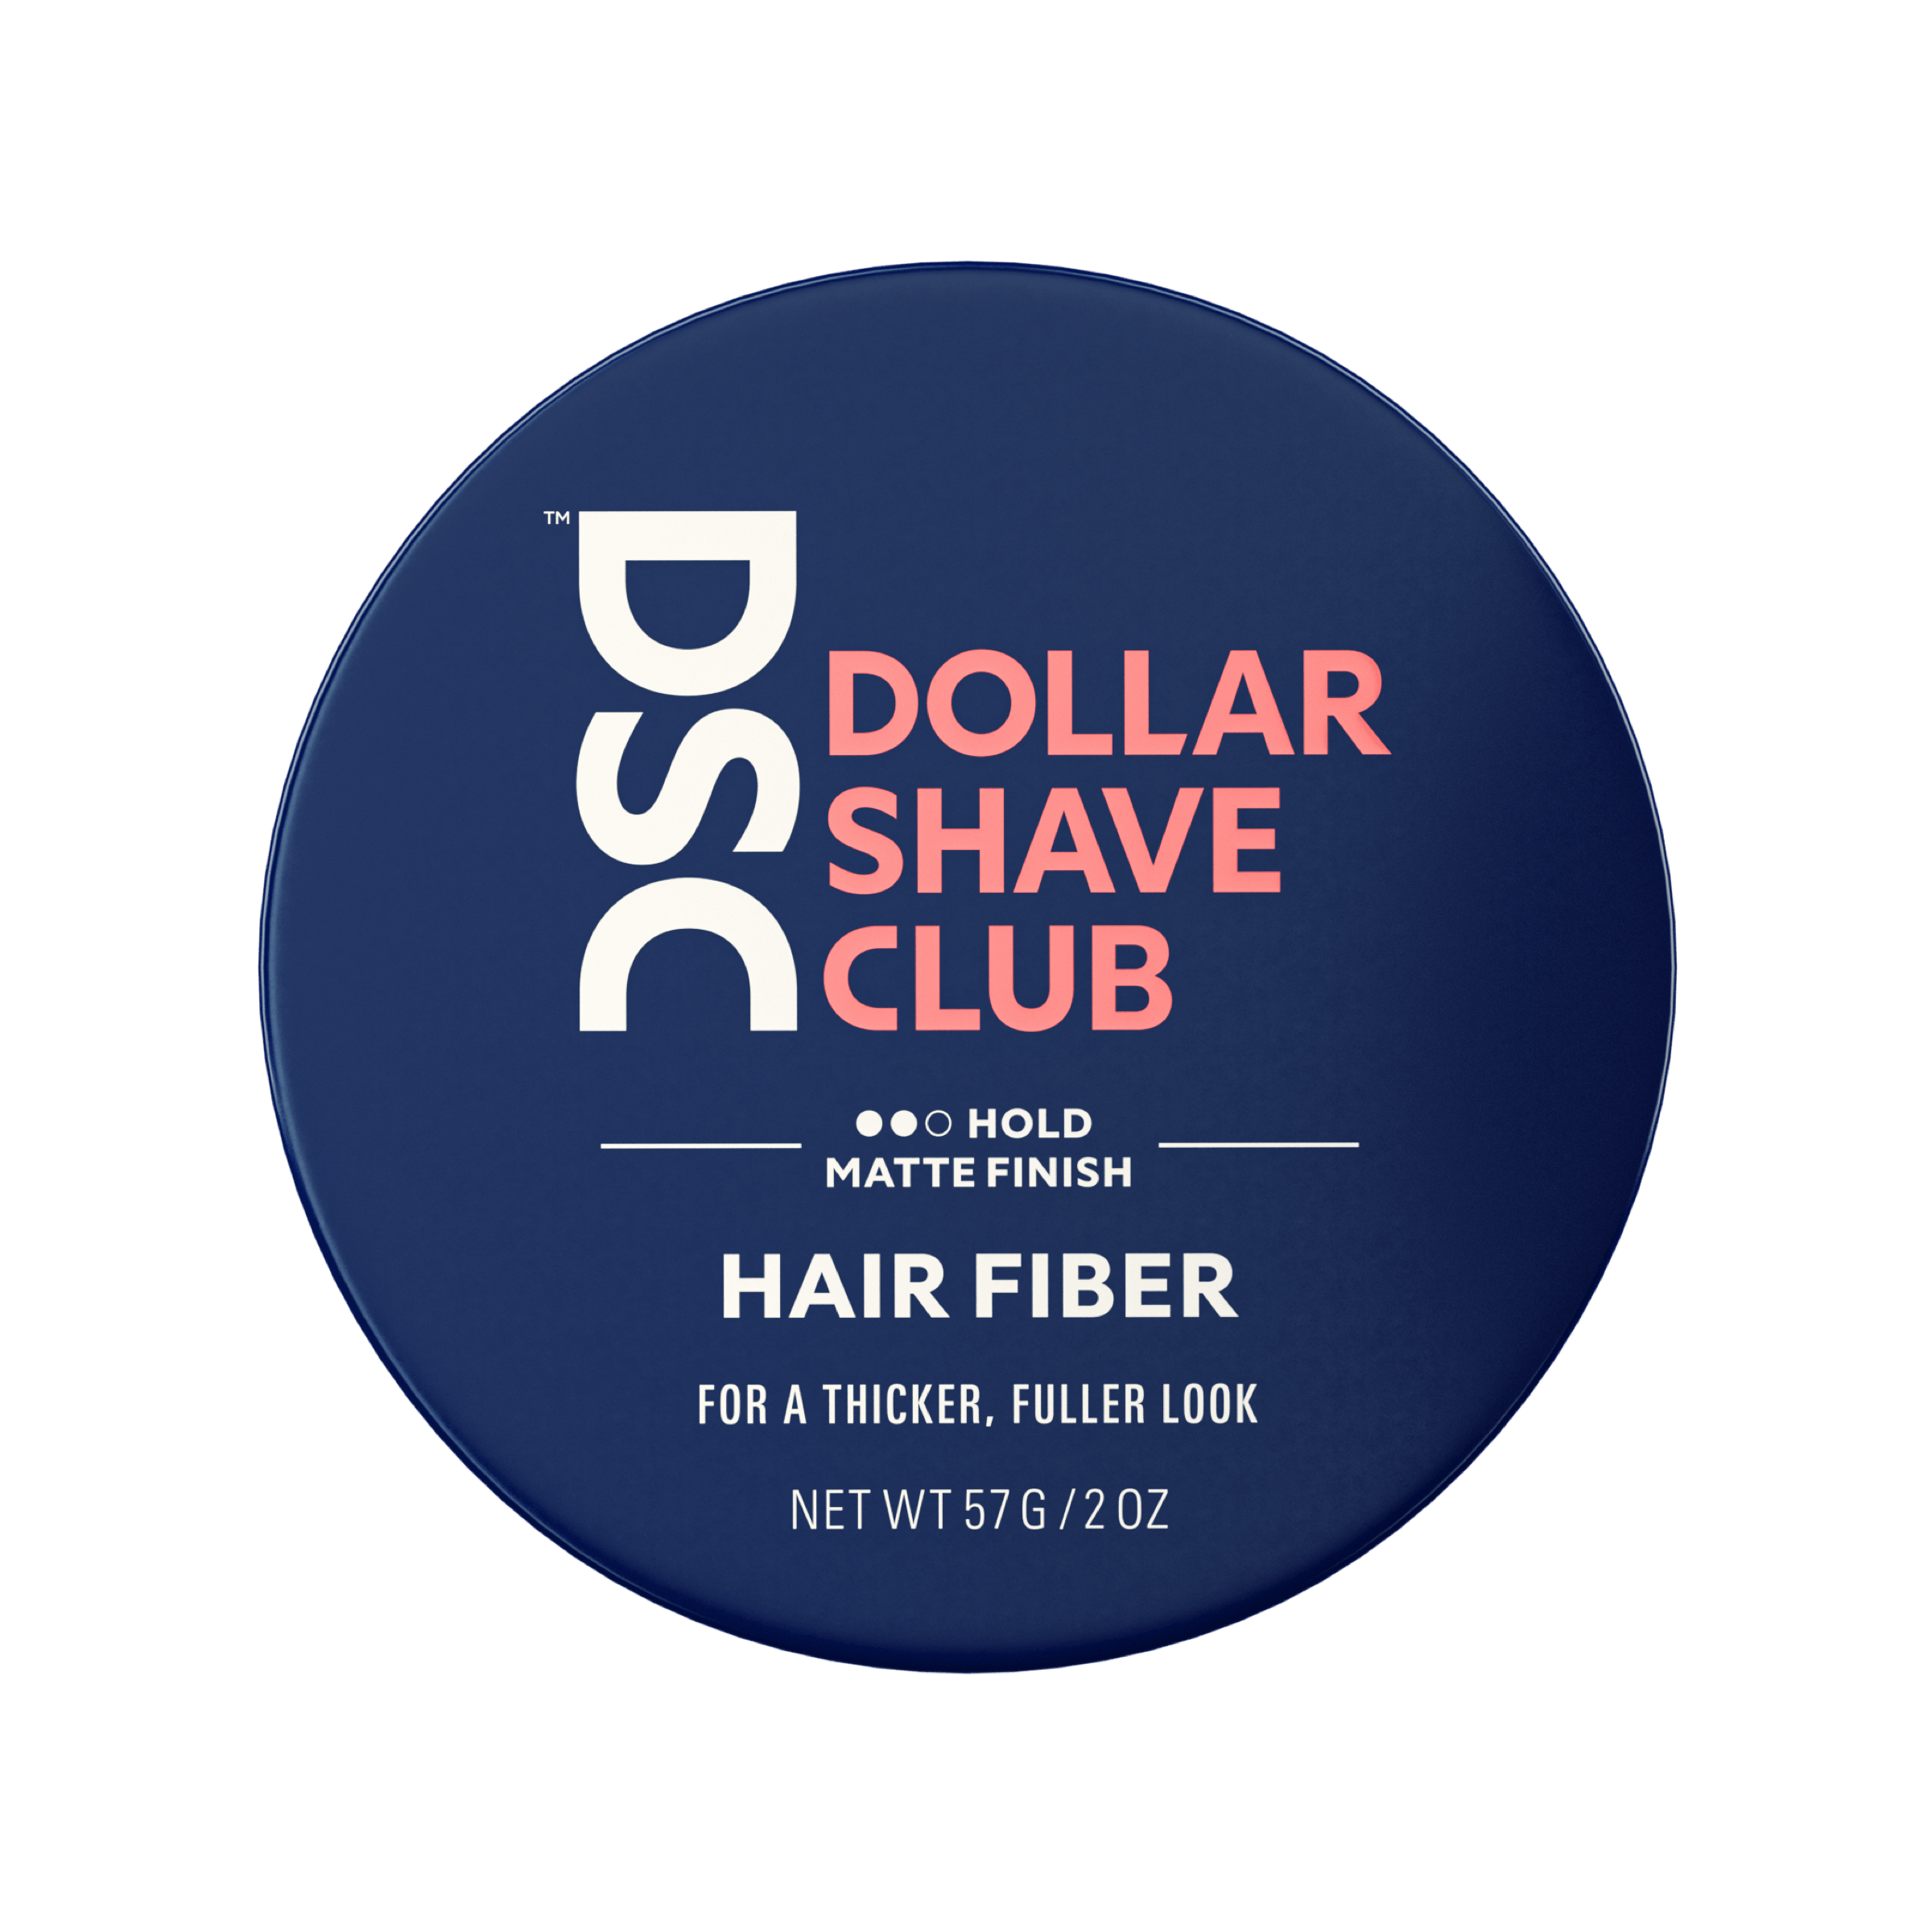 Dollar Shave Club Hair Fiber against blank backdrop.